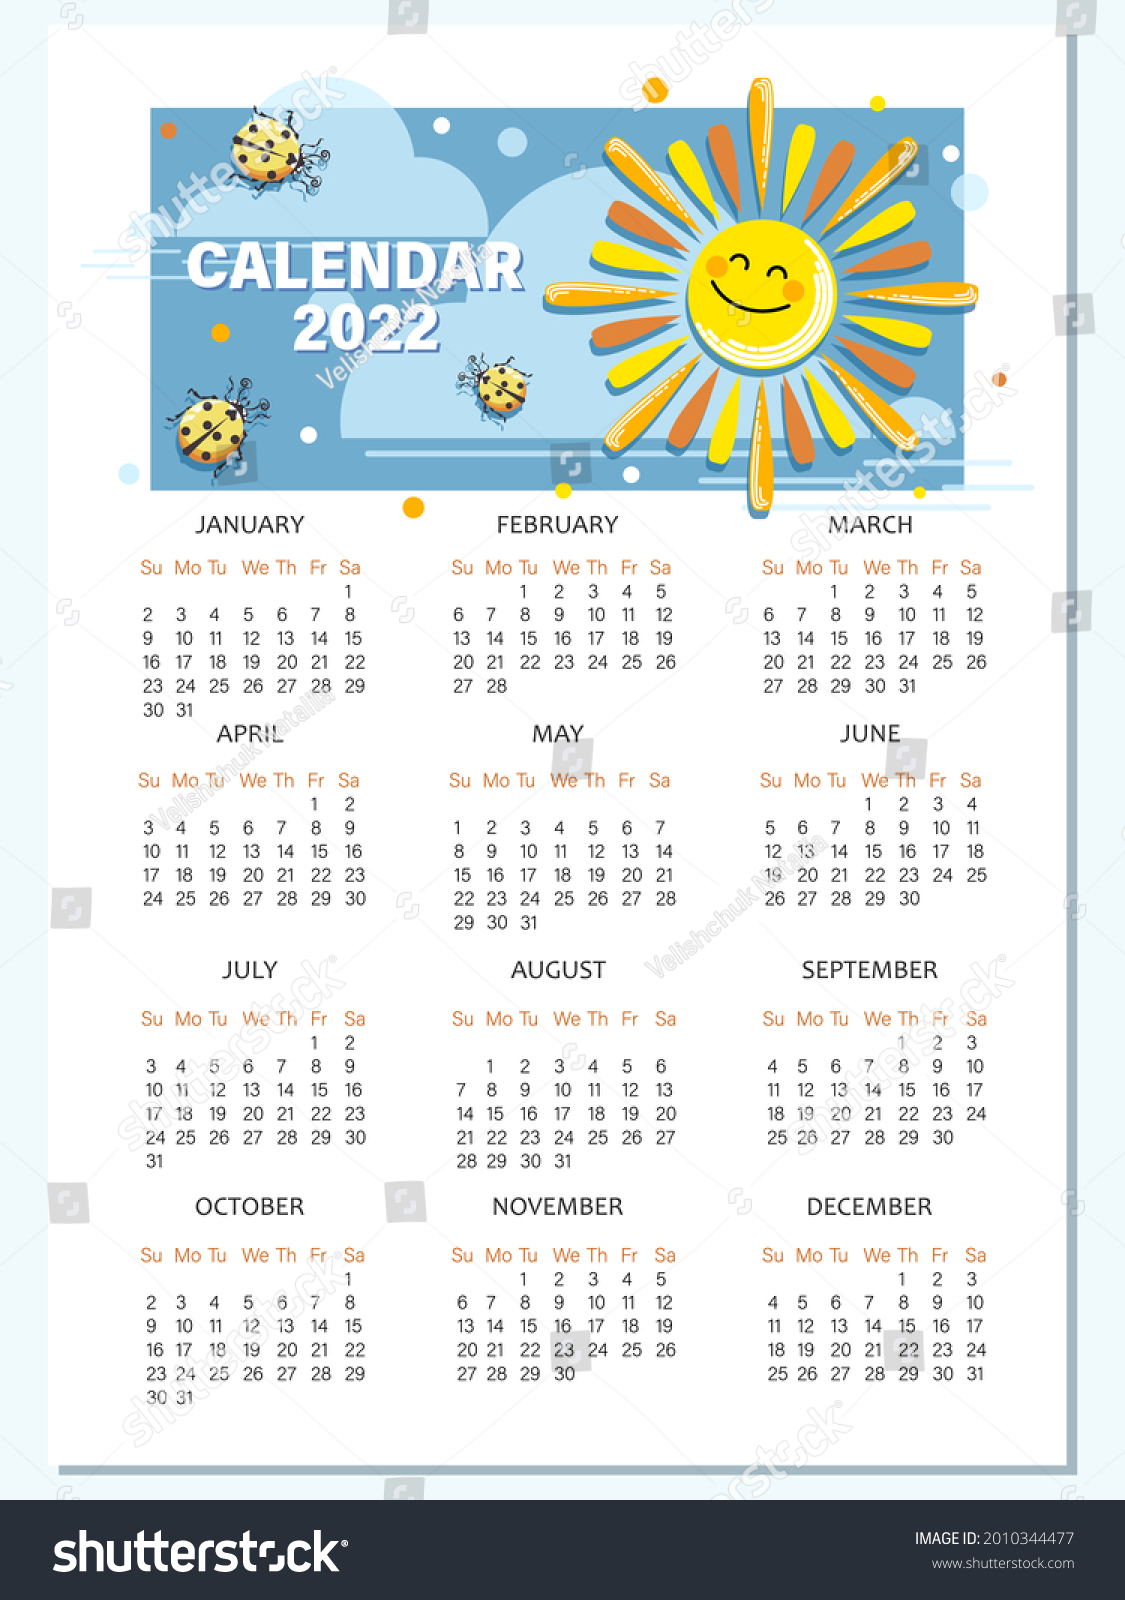 Free 2022 Cartoon Calendar Solar Calendar 2022 Calendar Template Cartoon Stock Vector (Royalty Free)  2010344477